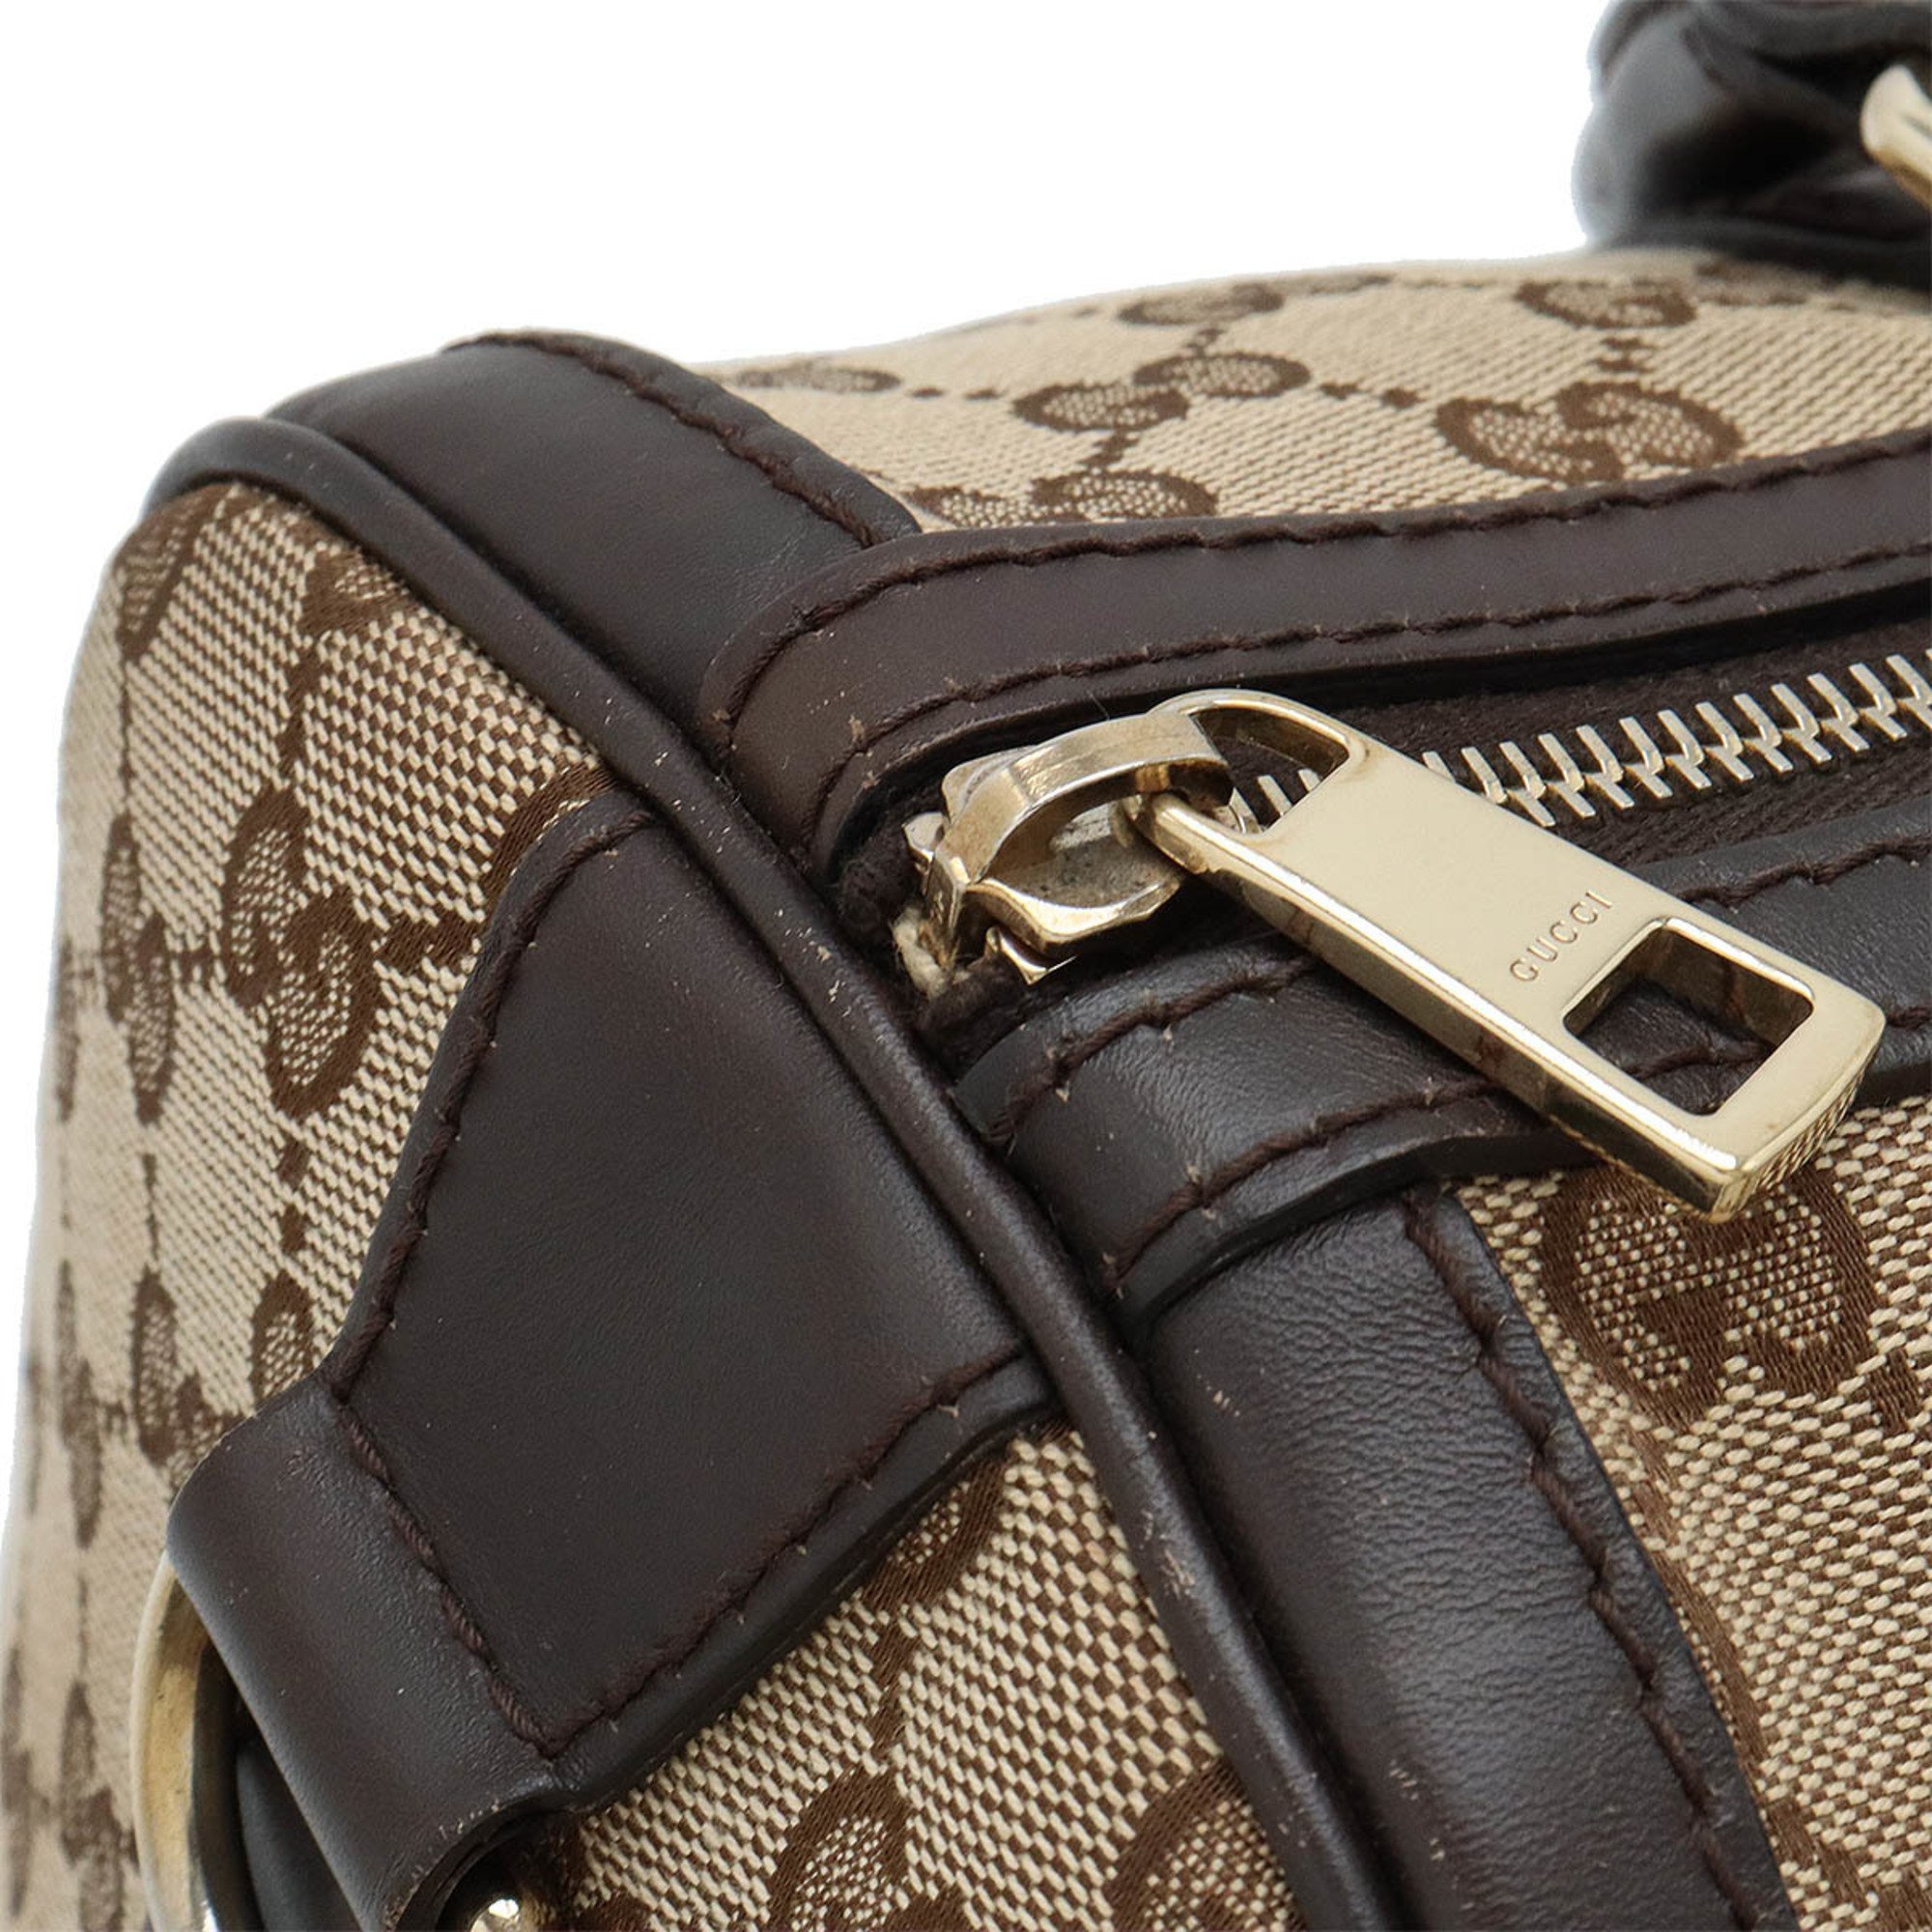 GUCCI Gucci GG Canvas Sherry Line Handbag Boston Shoulder Bag Leather Khaki Beige Dark Brown 247205